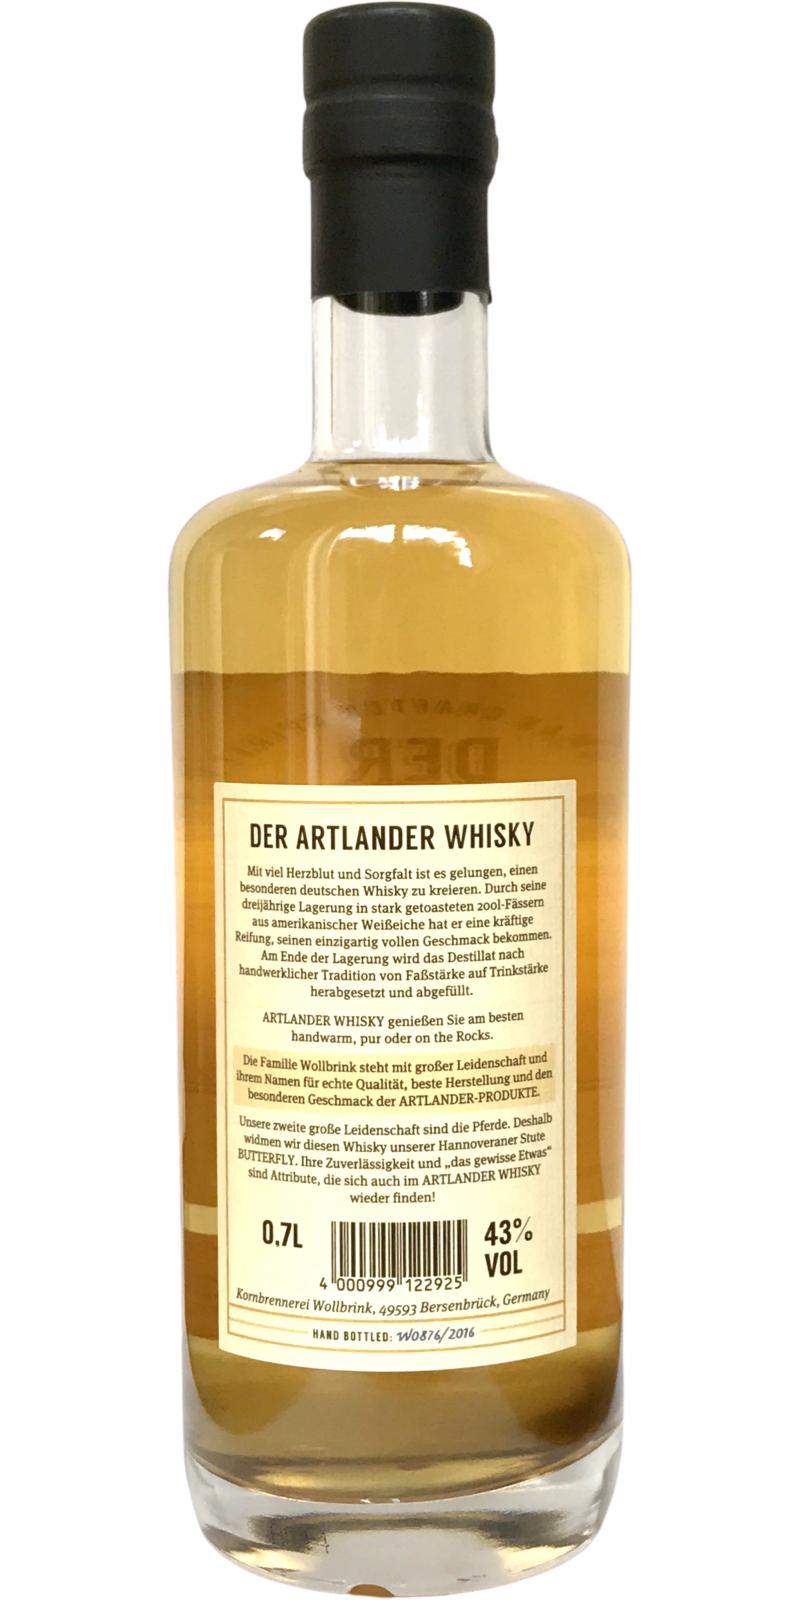 Der Artlander Whisky